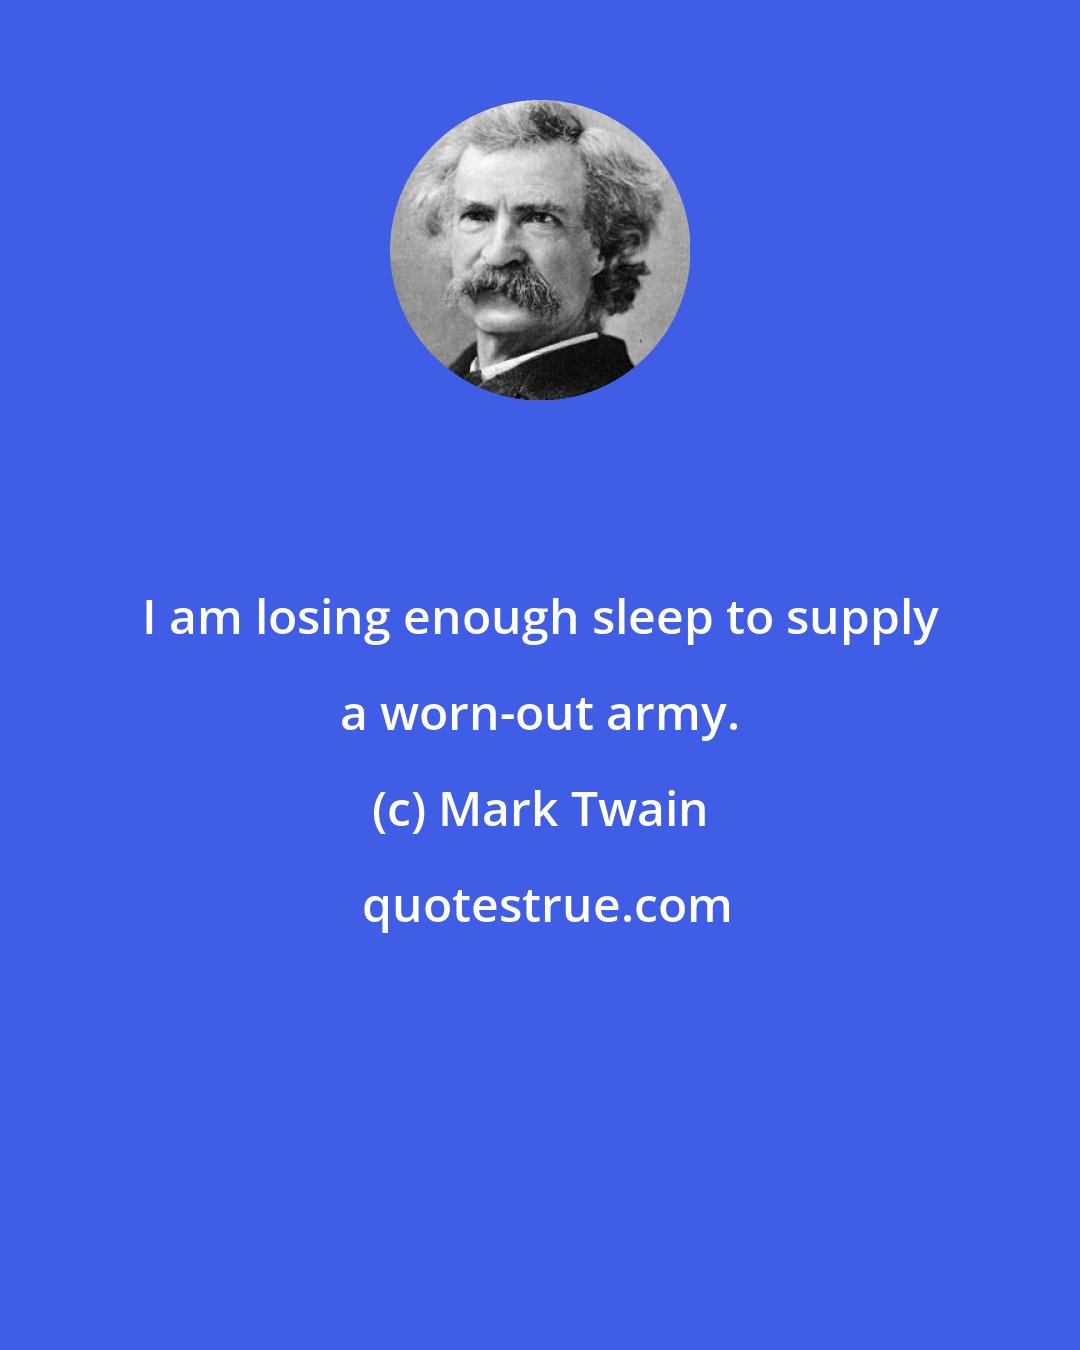 Mark Twain: I am losing enough sleep to supply a worn-out army.